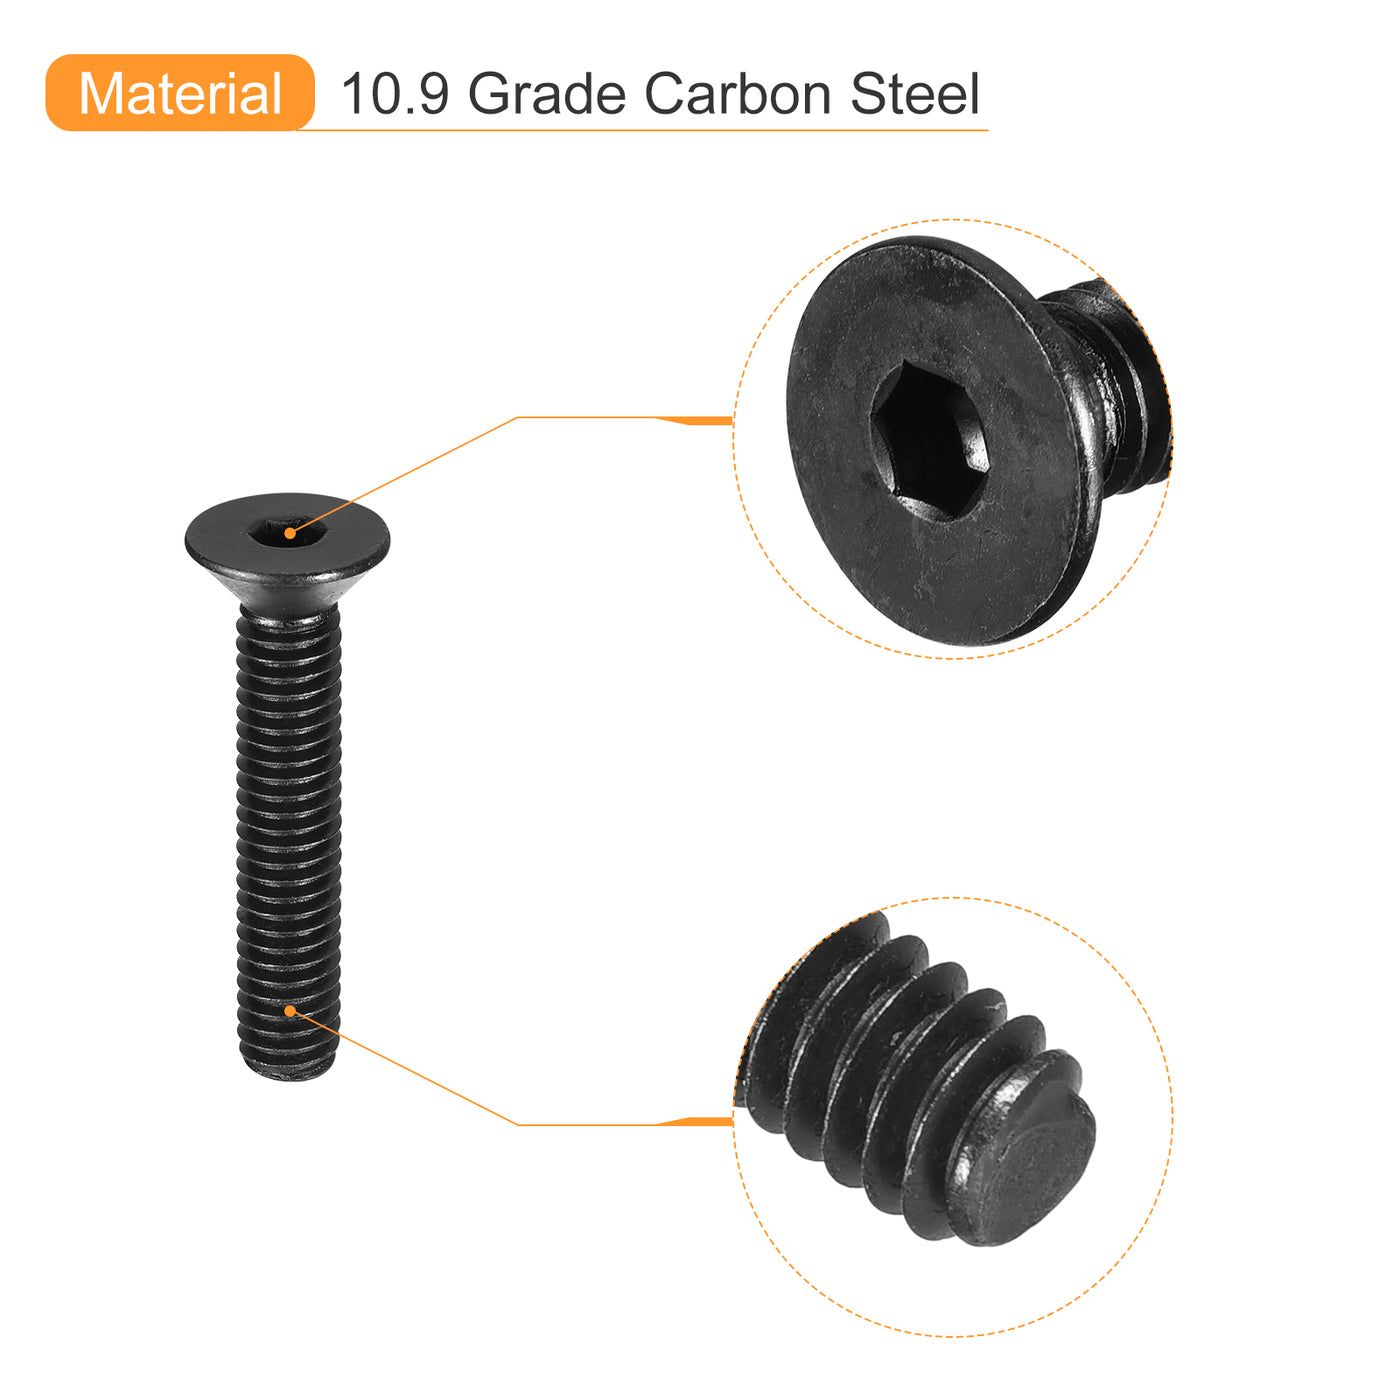 uxcell Uxcell 5/16-18x1-3/4" Flat Head Socket Cap Screws, 10.9 Grade Carbon Steel, 20PCS